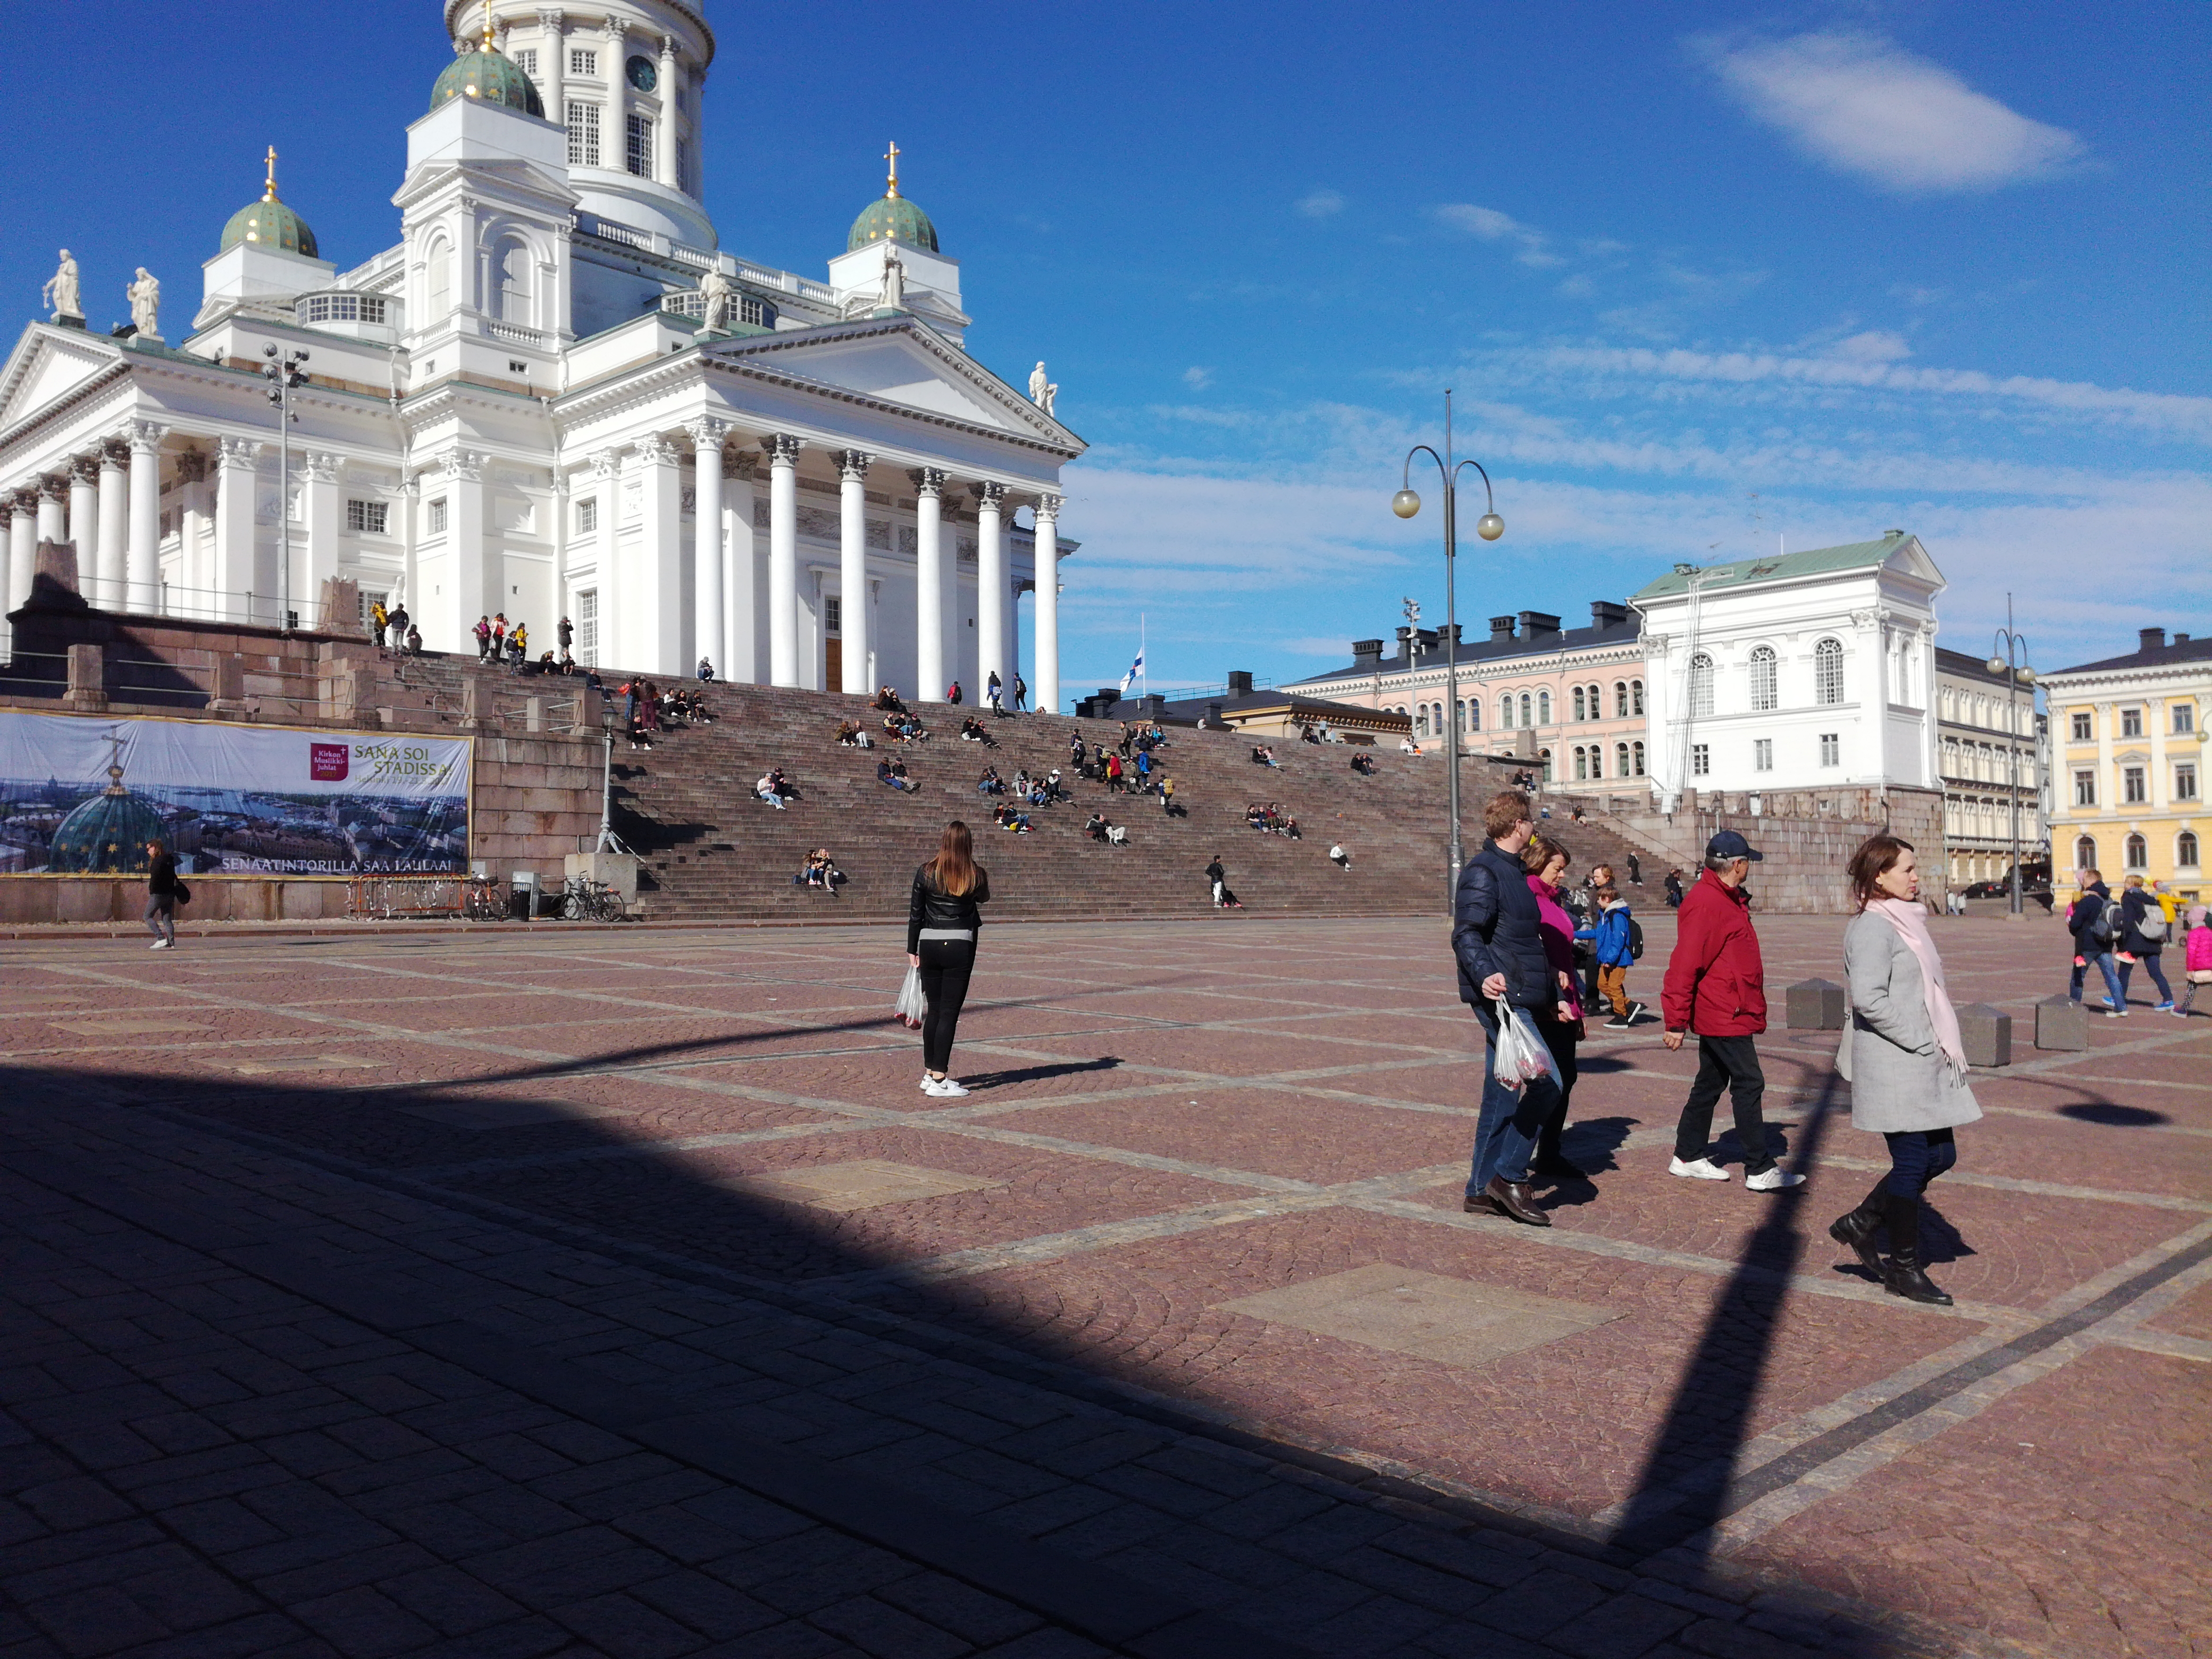 Russian soldiers on the Helsinki Senate Square rephoto